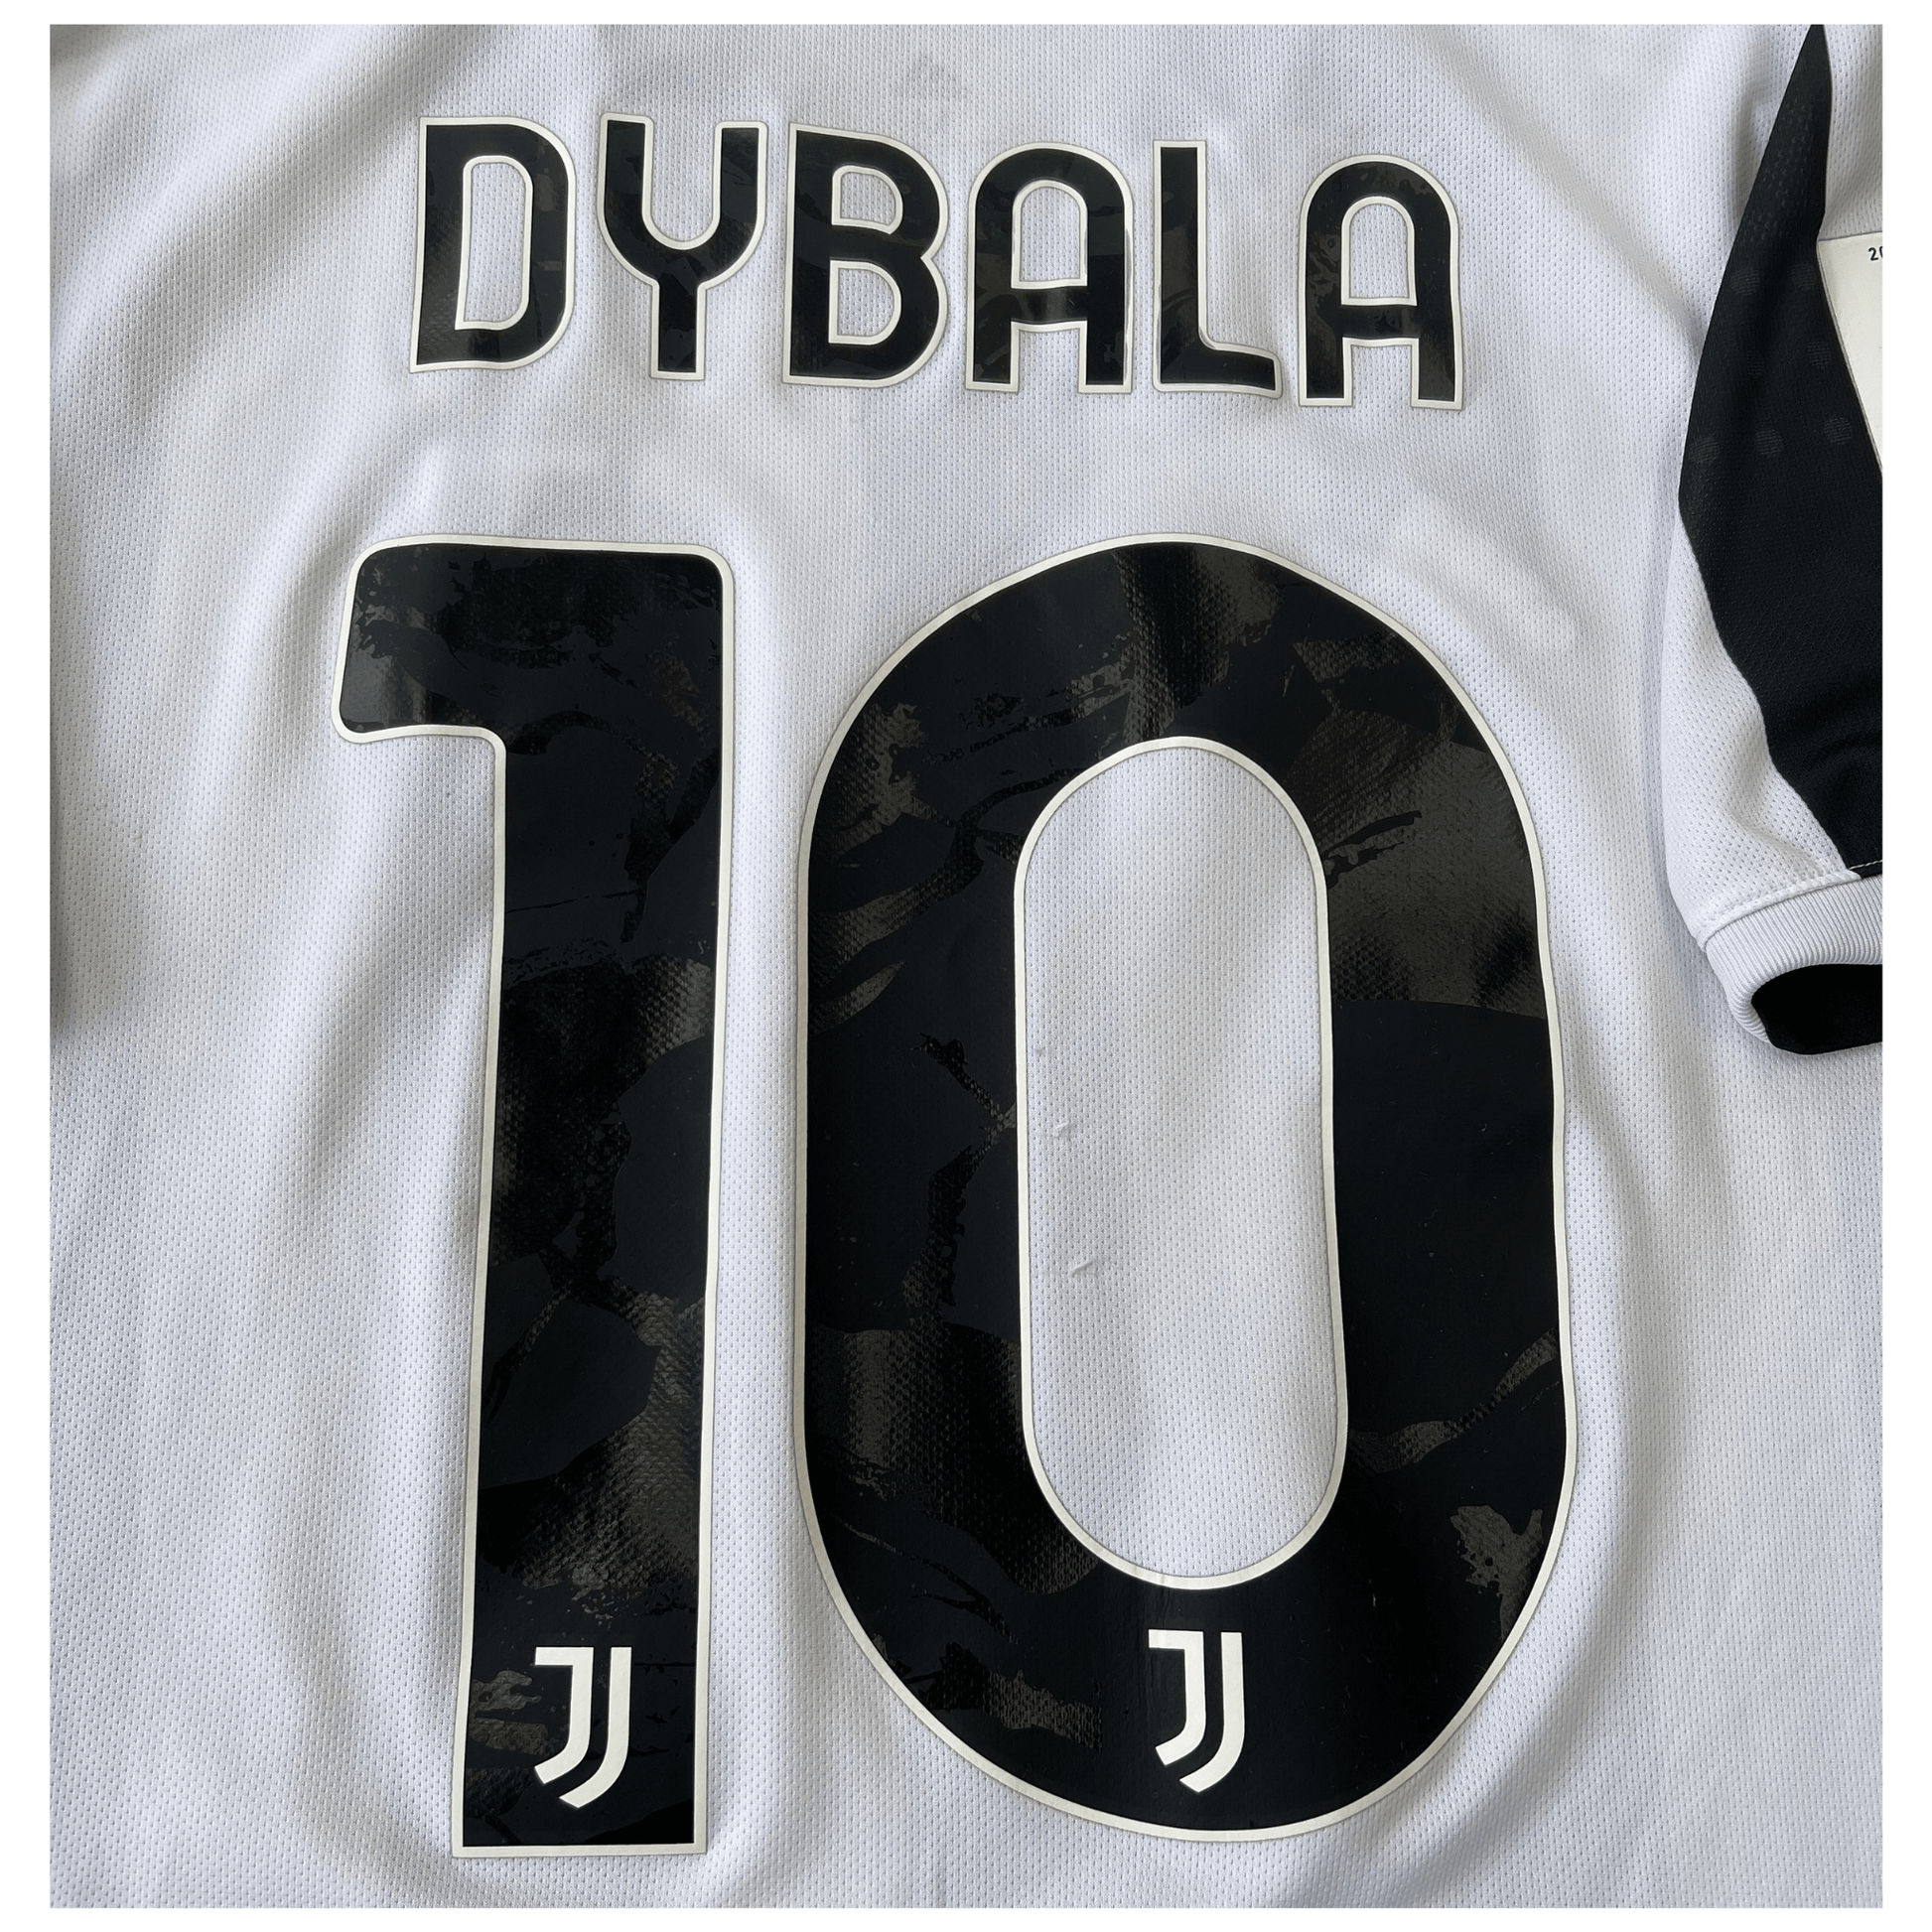 Juventus 2021/22 Home Jersey Number - Paulo Dybala